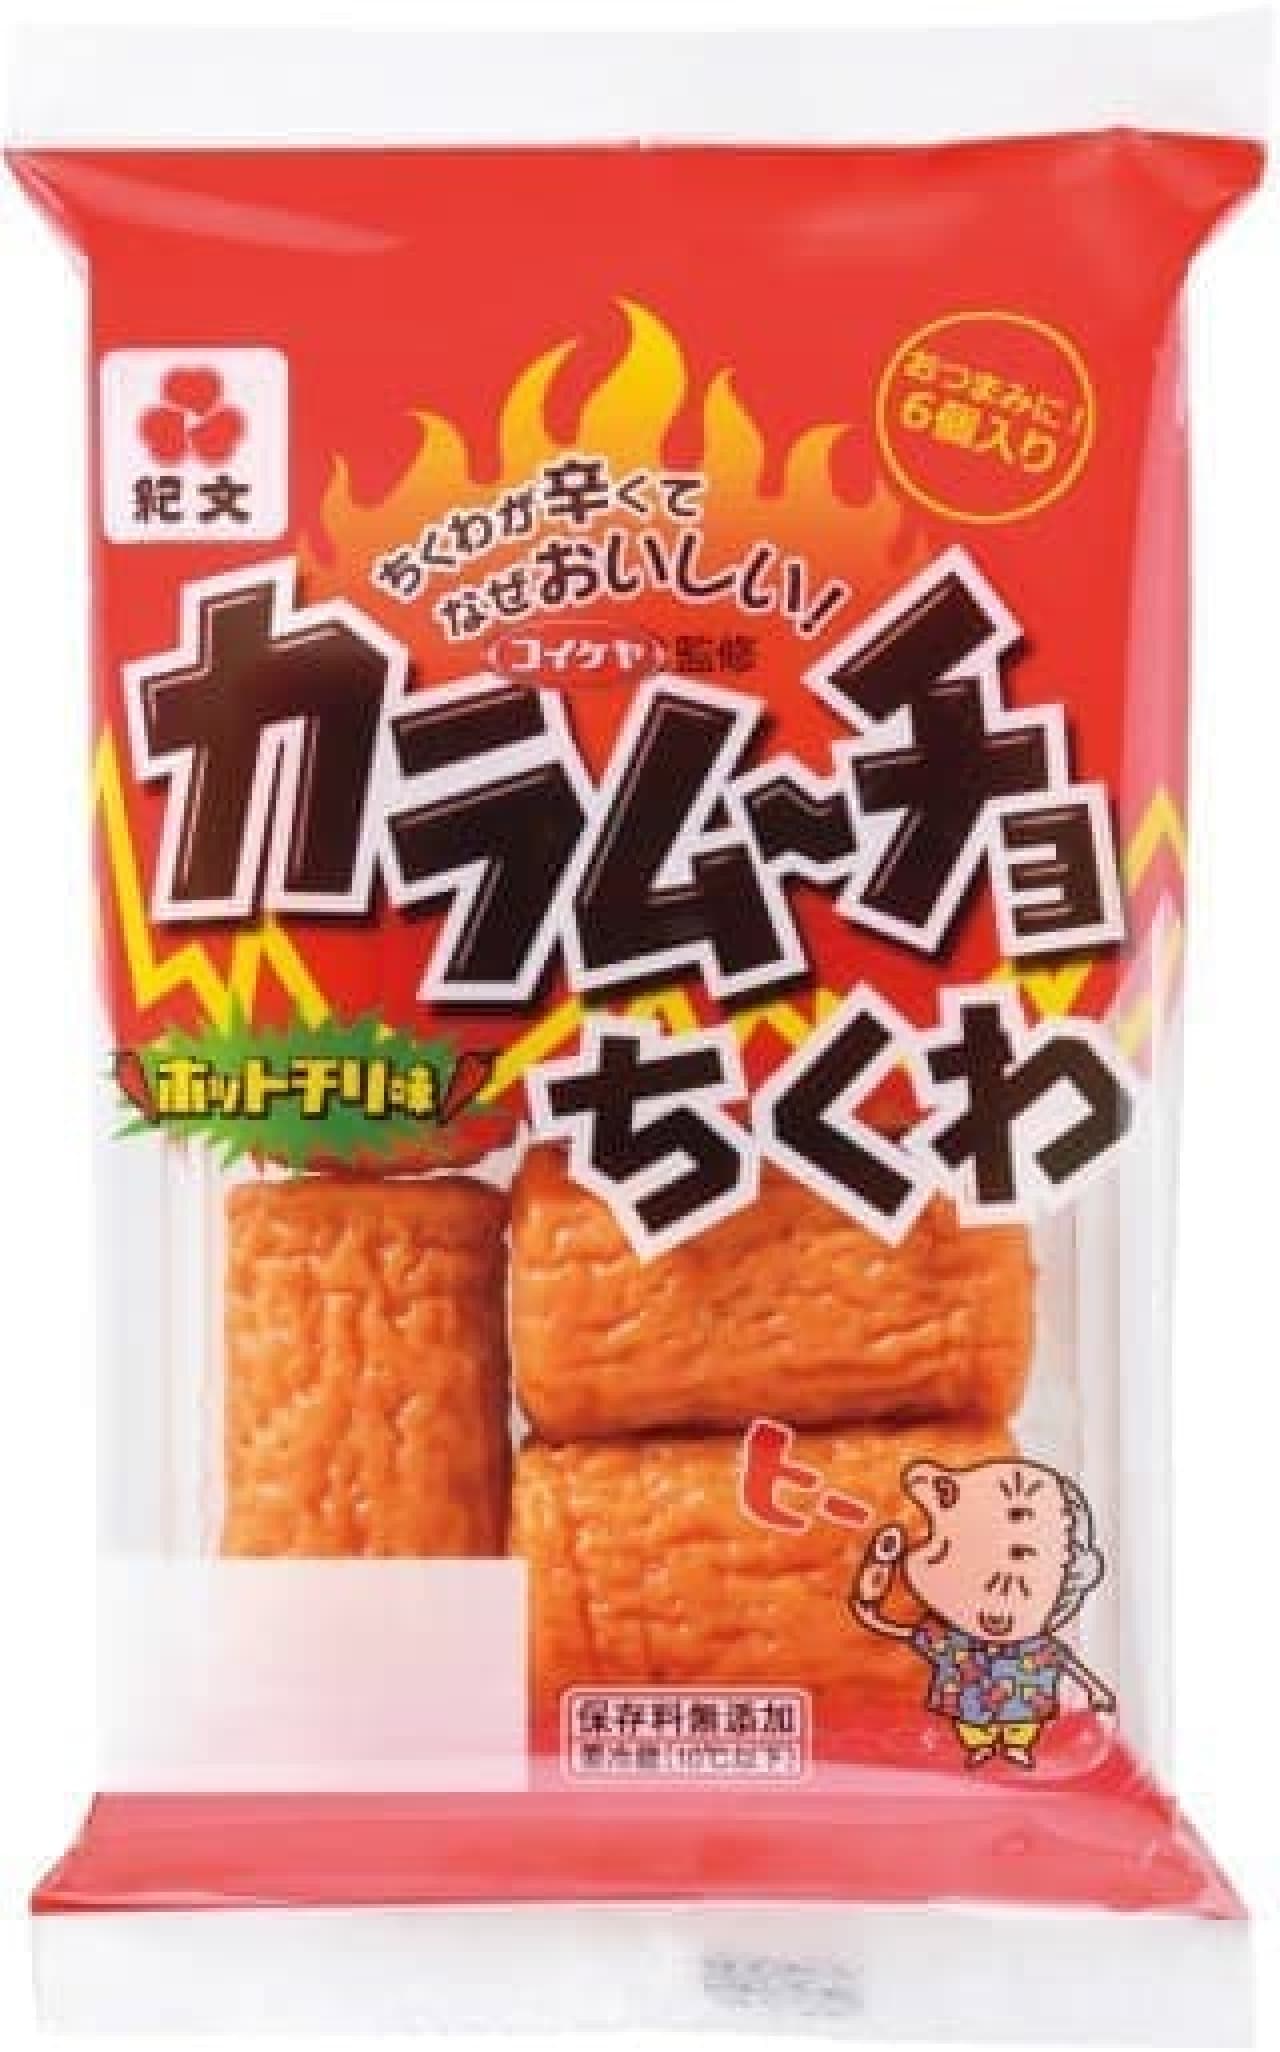 "Karamucho Chikuwa" jointly developed by Koike-ya and Kibun Foods